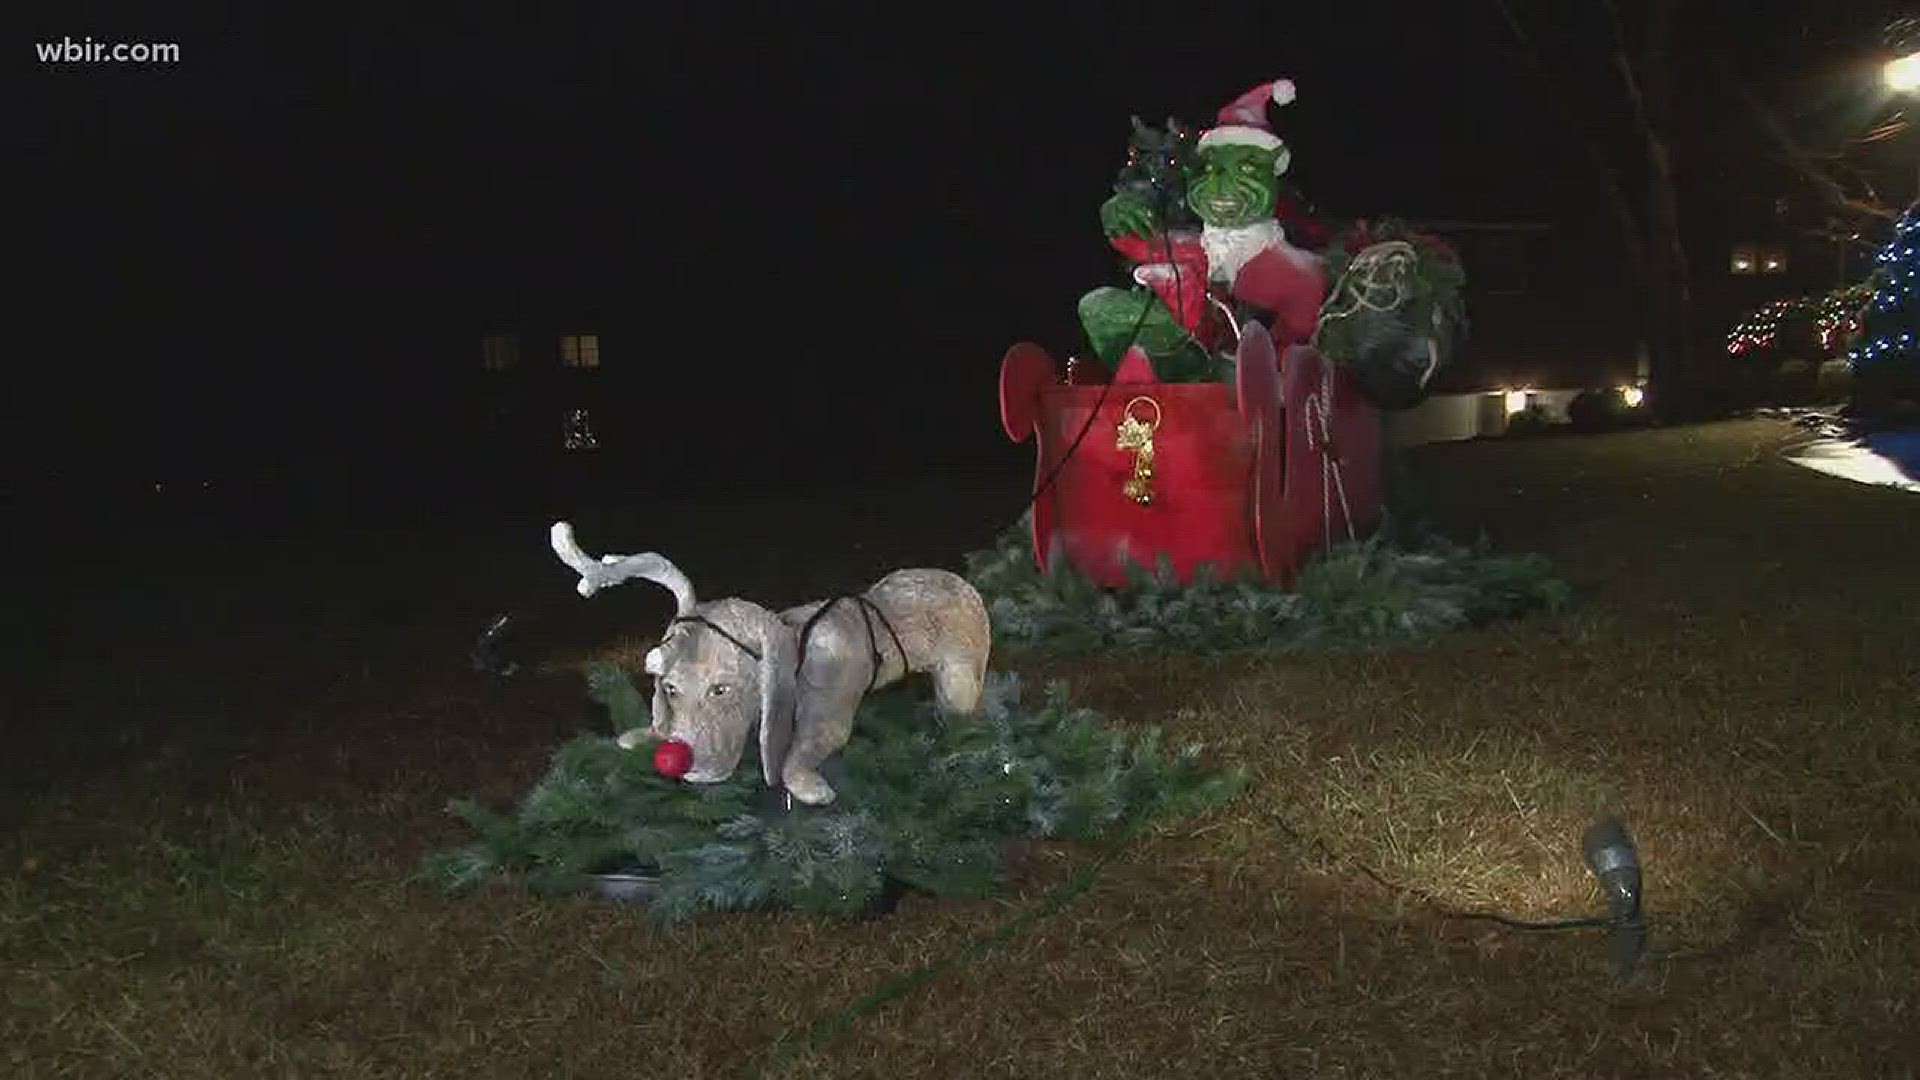 Dec. 22, 2017: A homemade Grinch display is bringing Christmas cheer to a Farragut neighborhood.